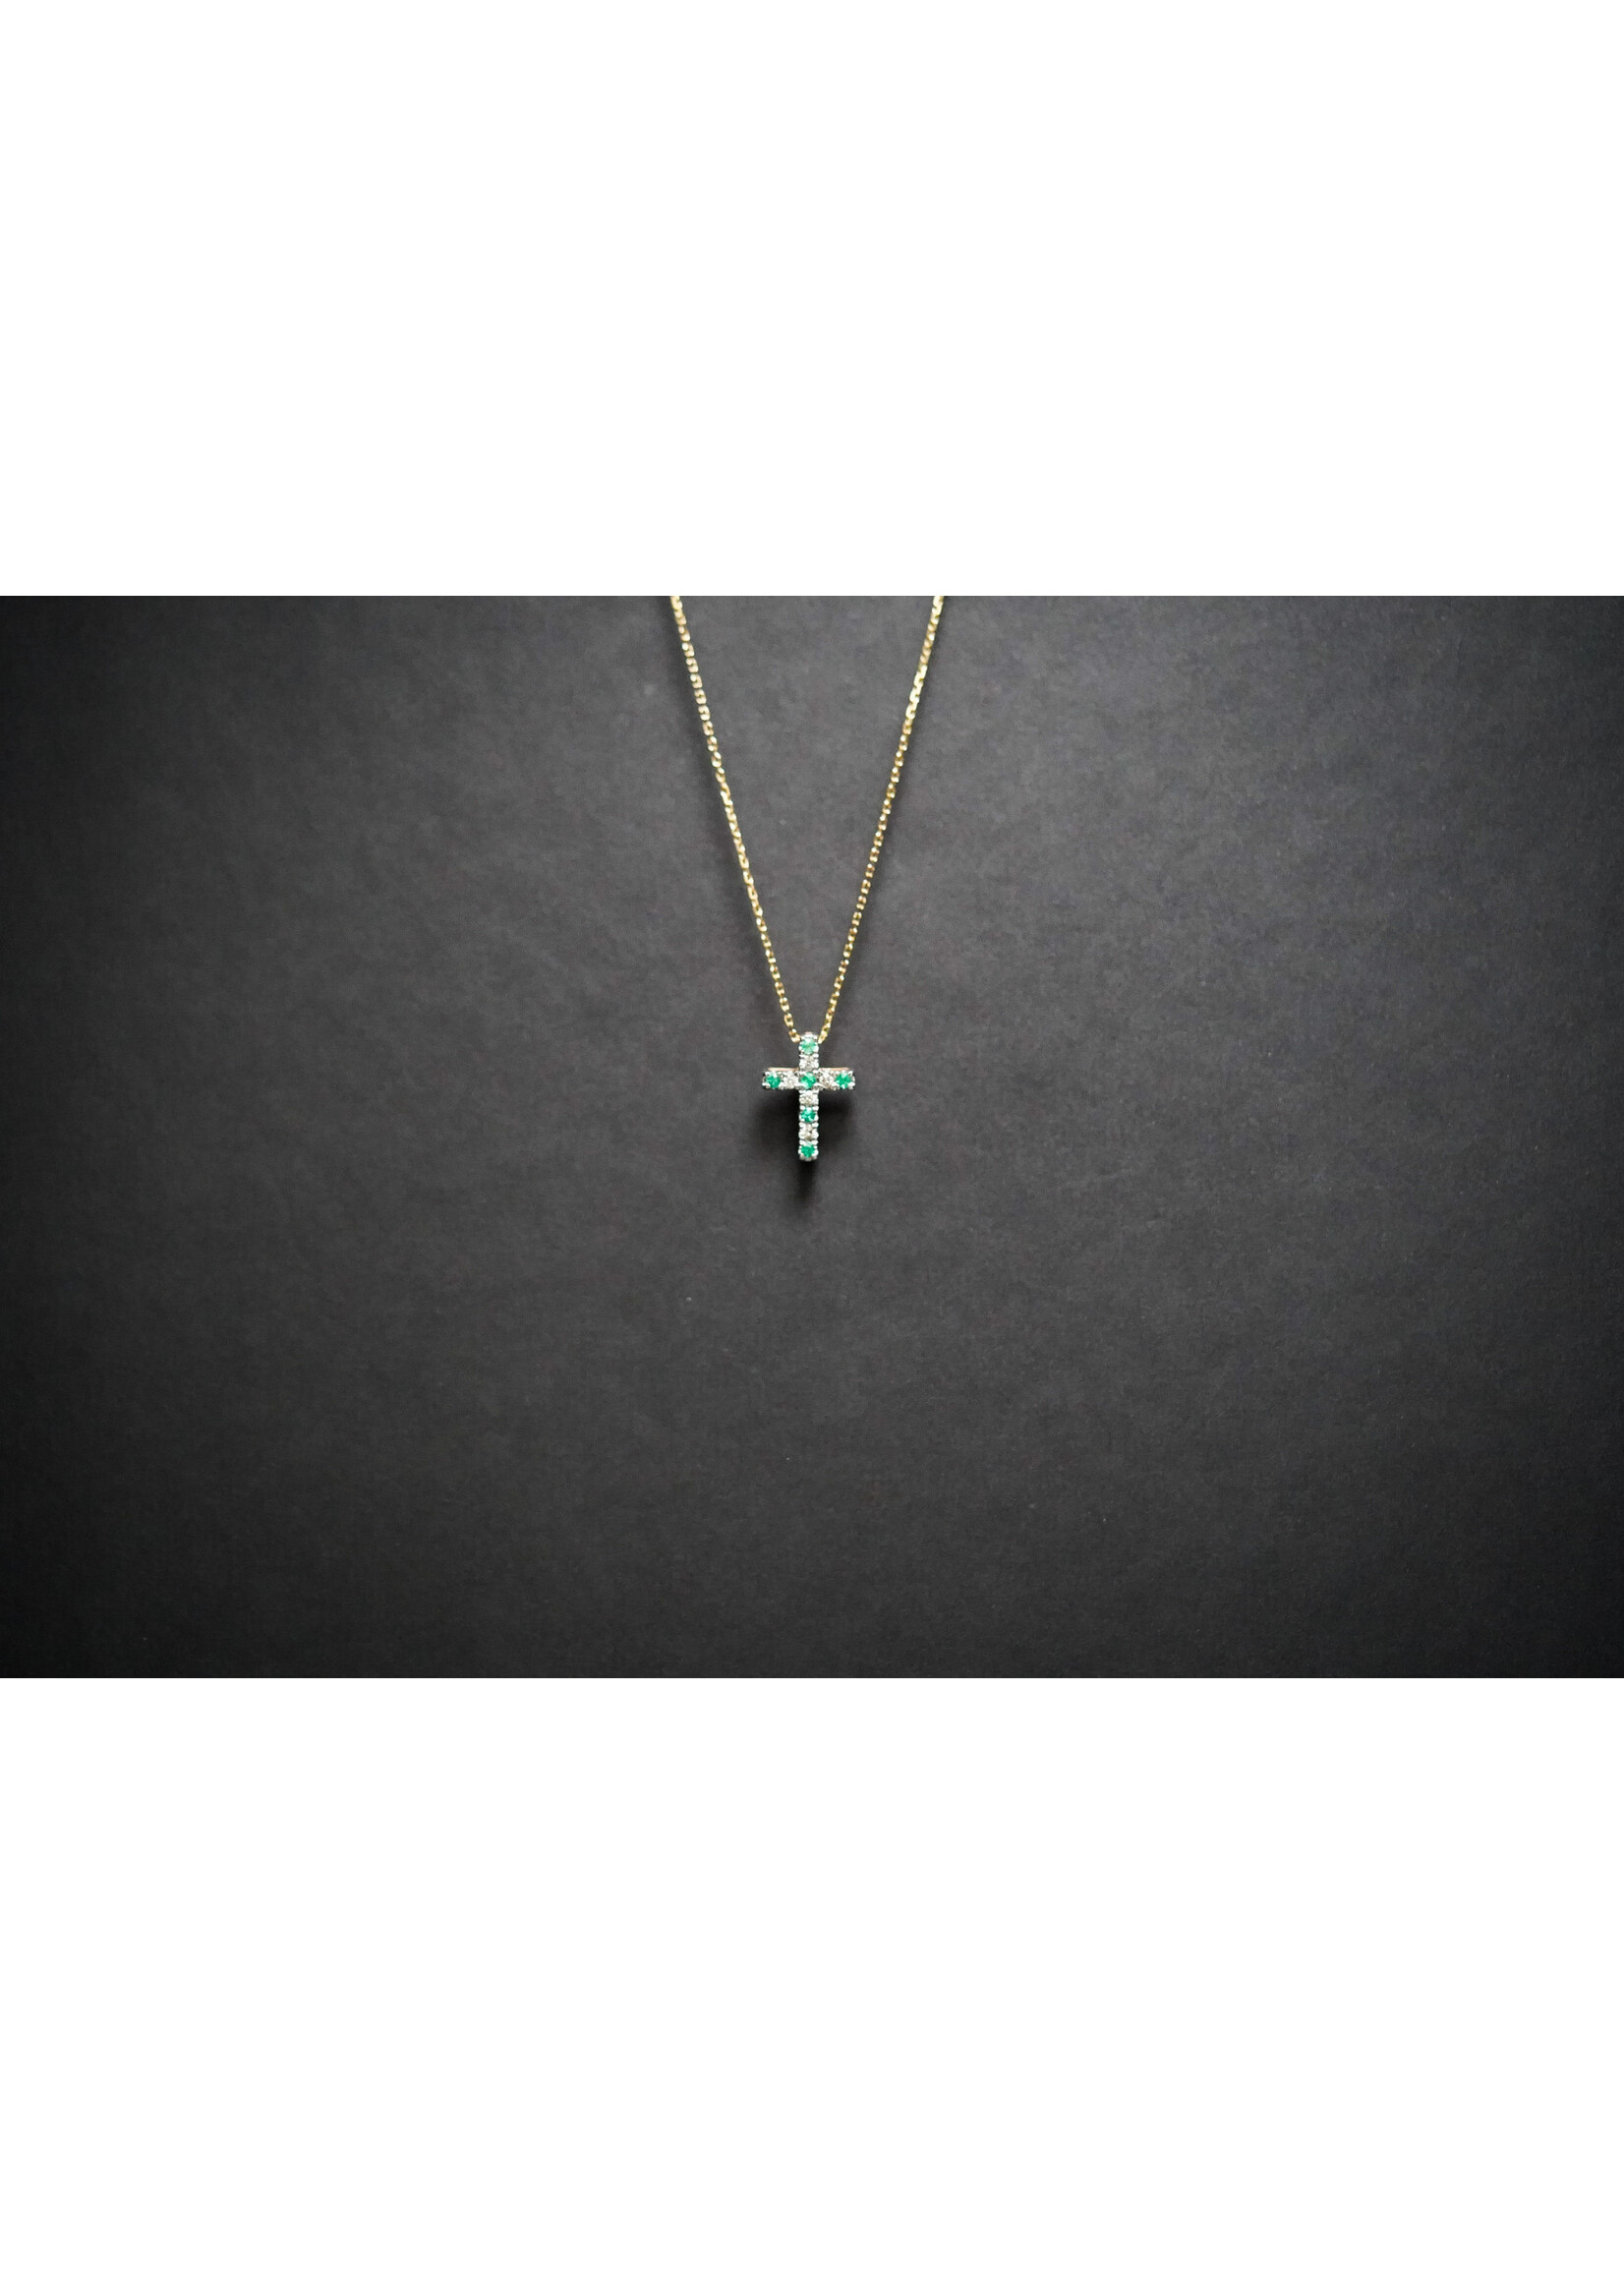 14KY 1.8g .18ctw Emerald & Diamond Cross Necklace 16-18"